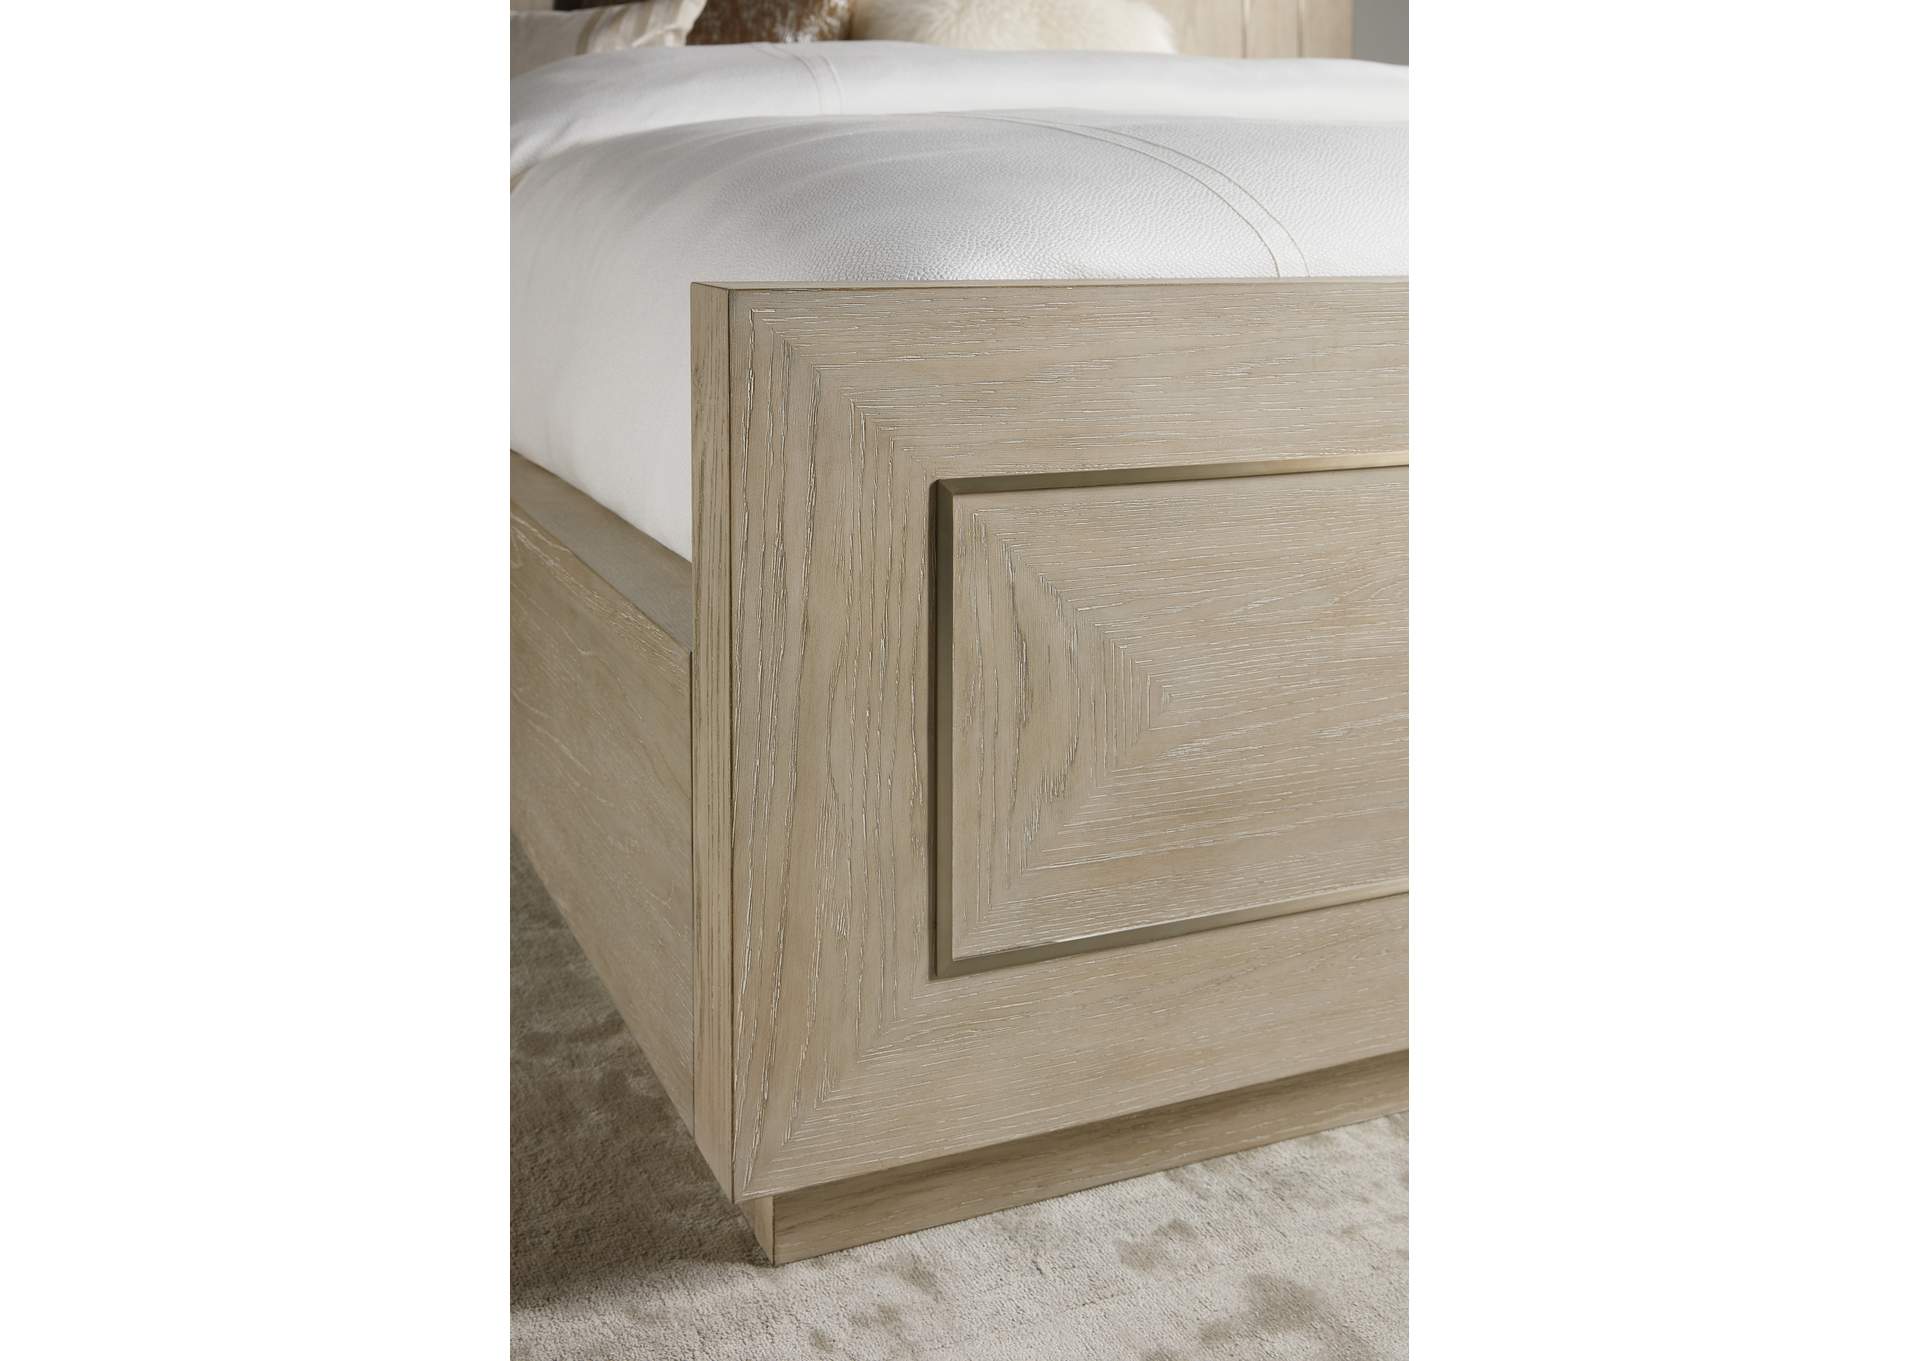 Cascade California King Panel Bed,Hooker Furniture